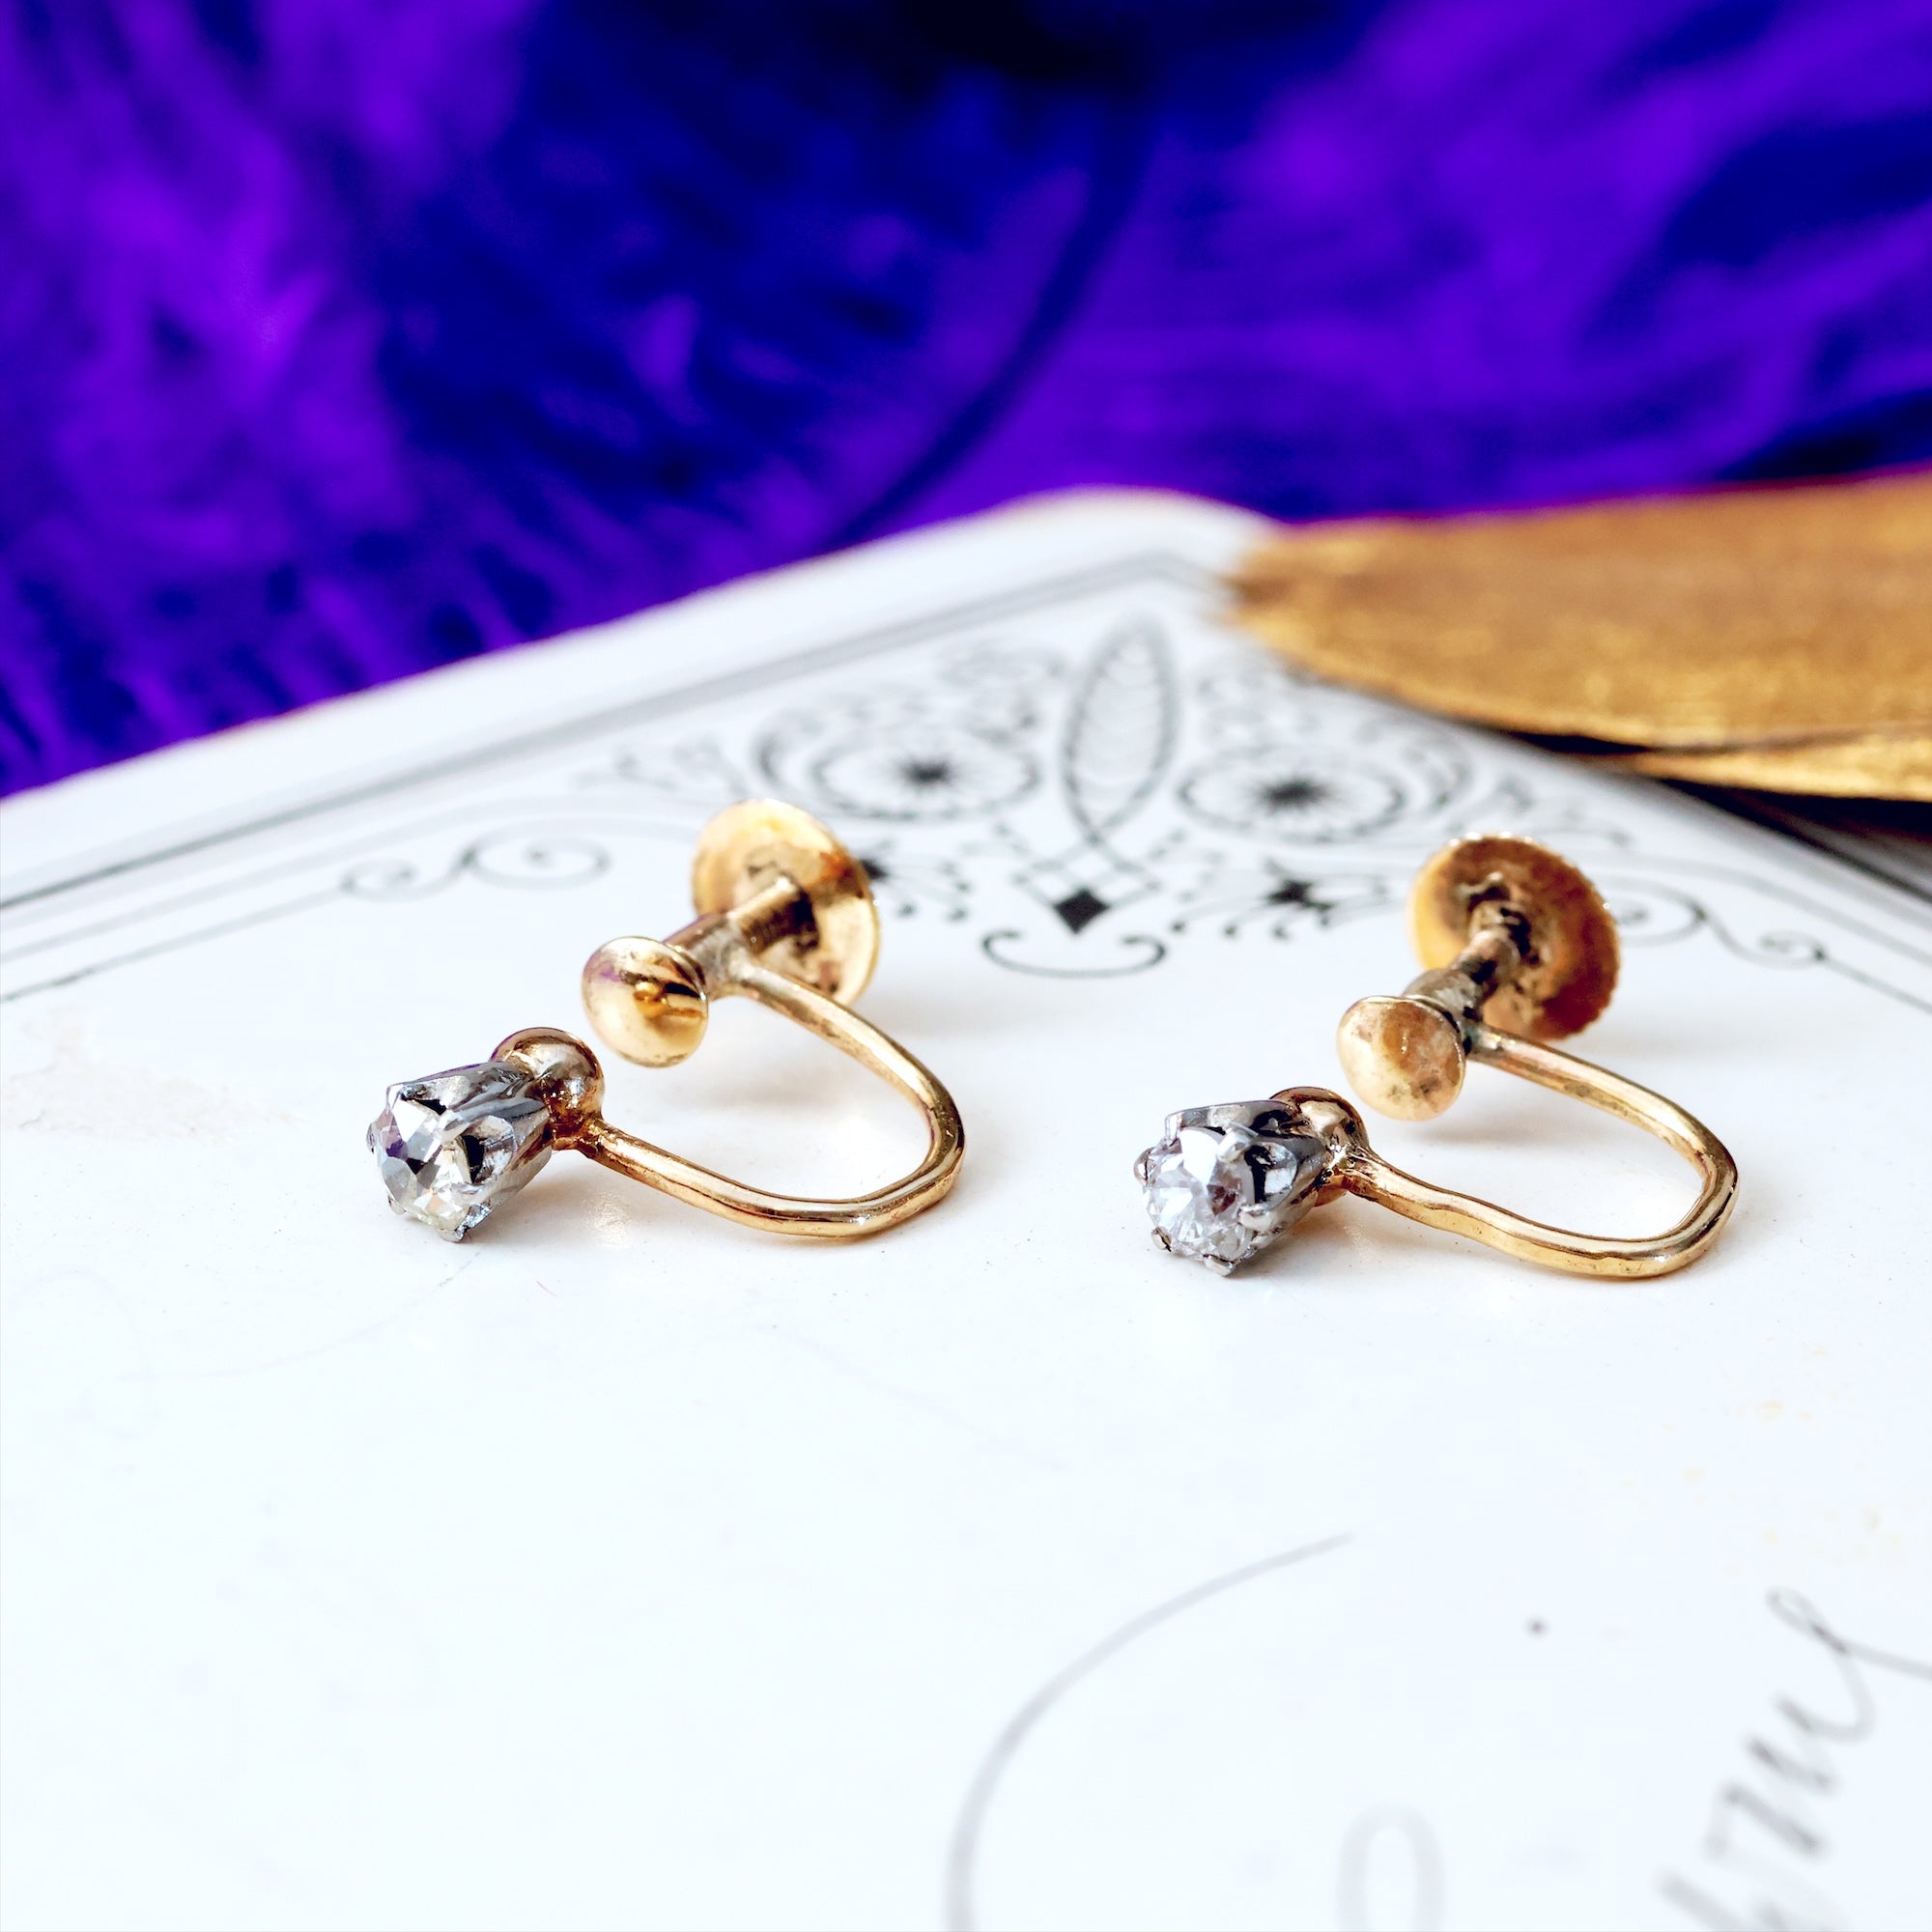 Rare! Authentic Tiffany & Co 18k Yellow Gold Diamond Earrings - Ruby Lane